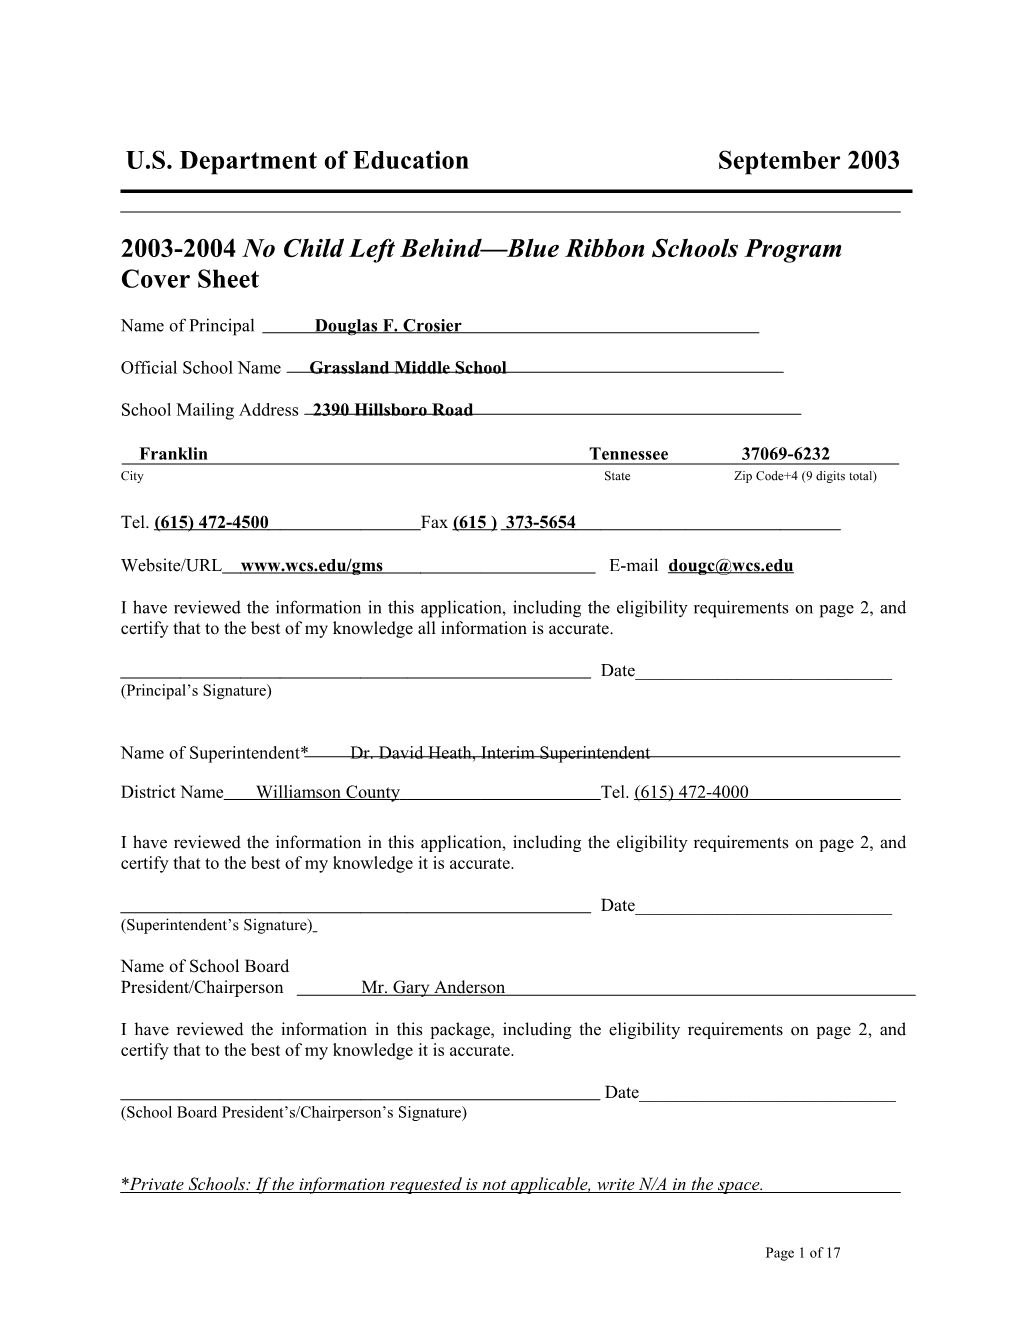 Grassland Middle School 2004 No Child Left Behind-Blue Ribbon School Application (Msword)